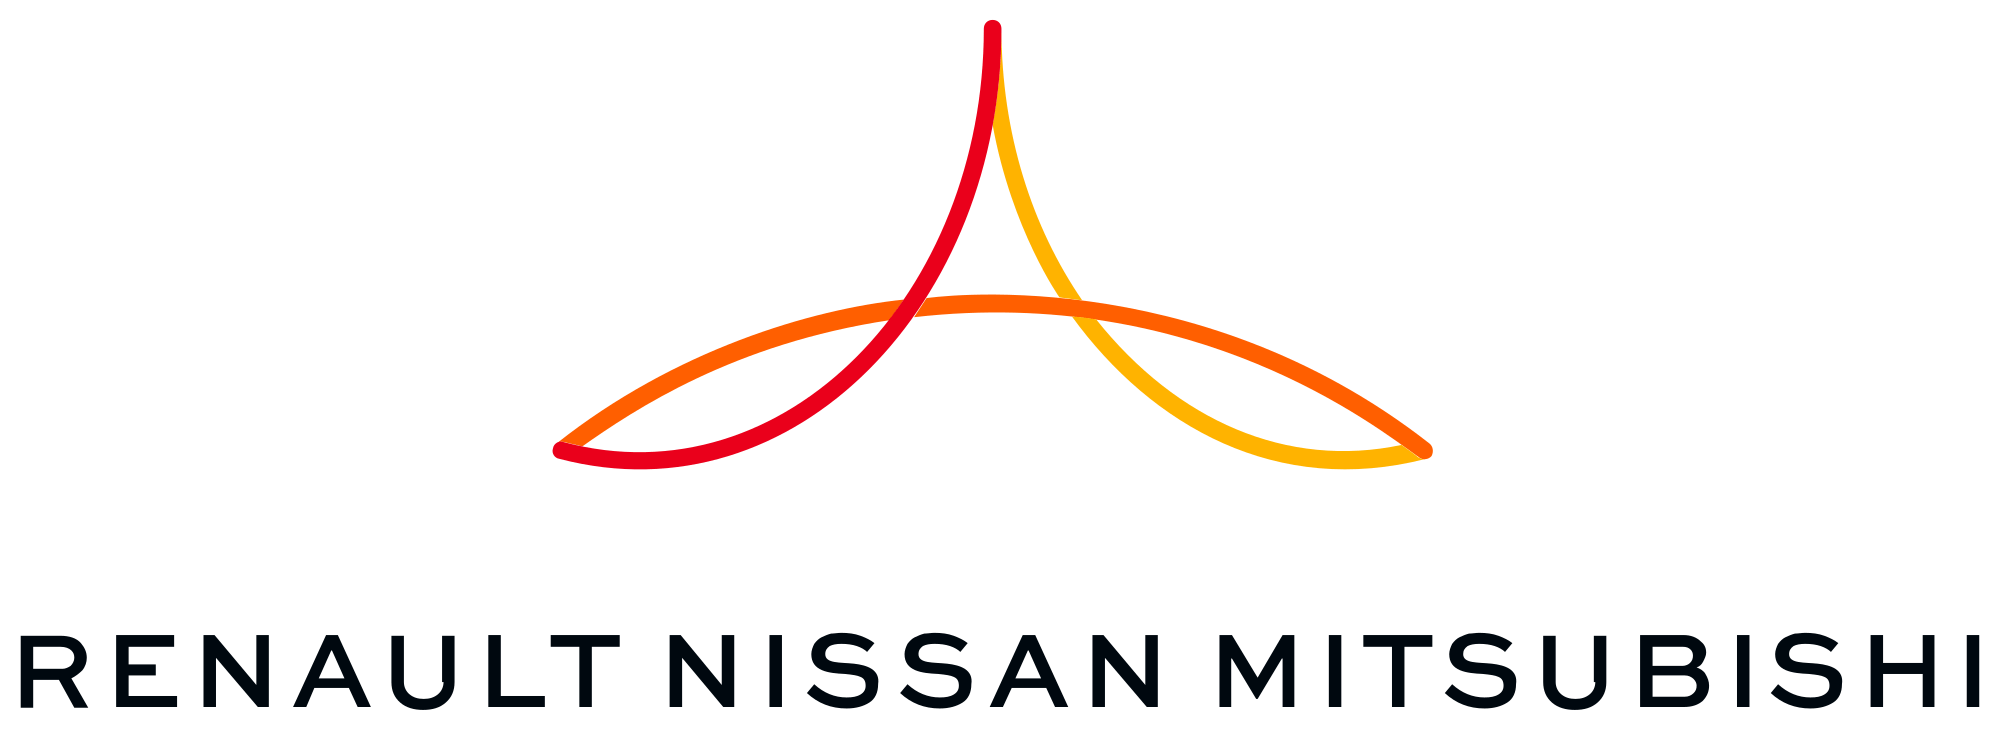 Renault-Nissan Mitsubishi Logo - File:Renault-Nissan-Mitsubishi Alliance logo.svg - Wikimedia Commons